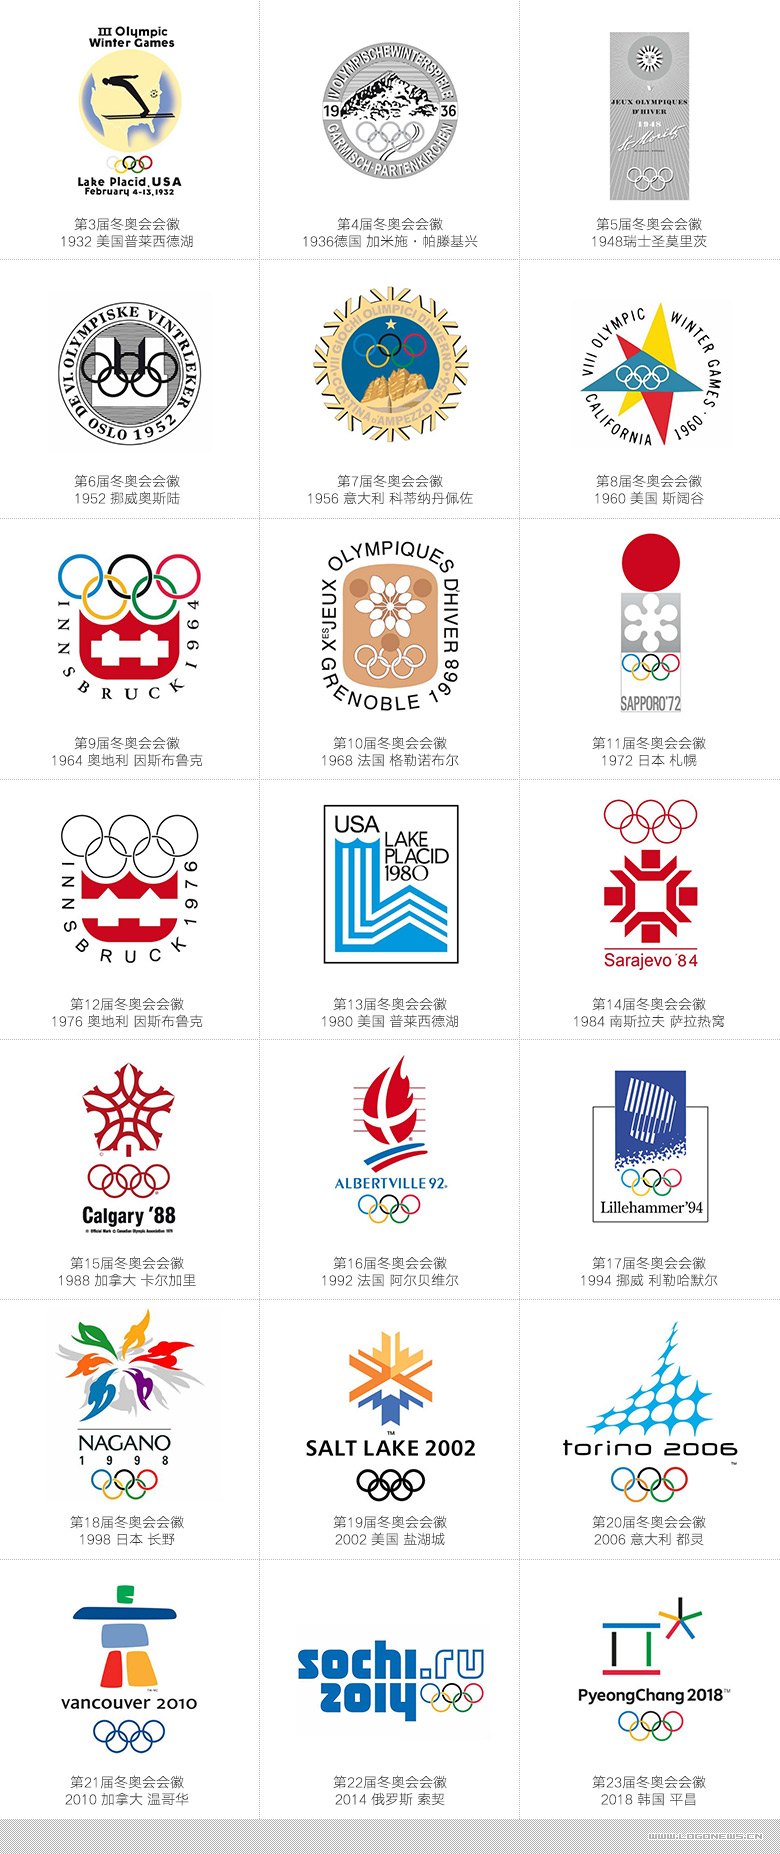 2022lol外围年北京冬奥会会徽“冬梦”会徽发布仪式在国家游泳中心隆